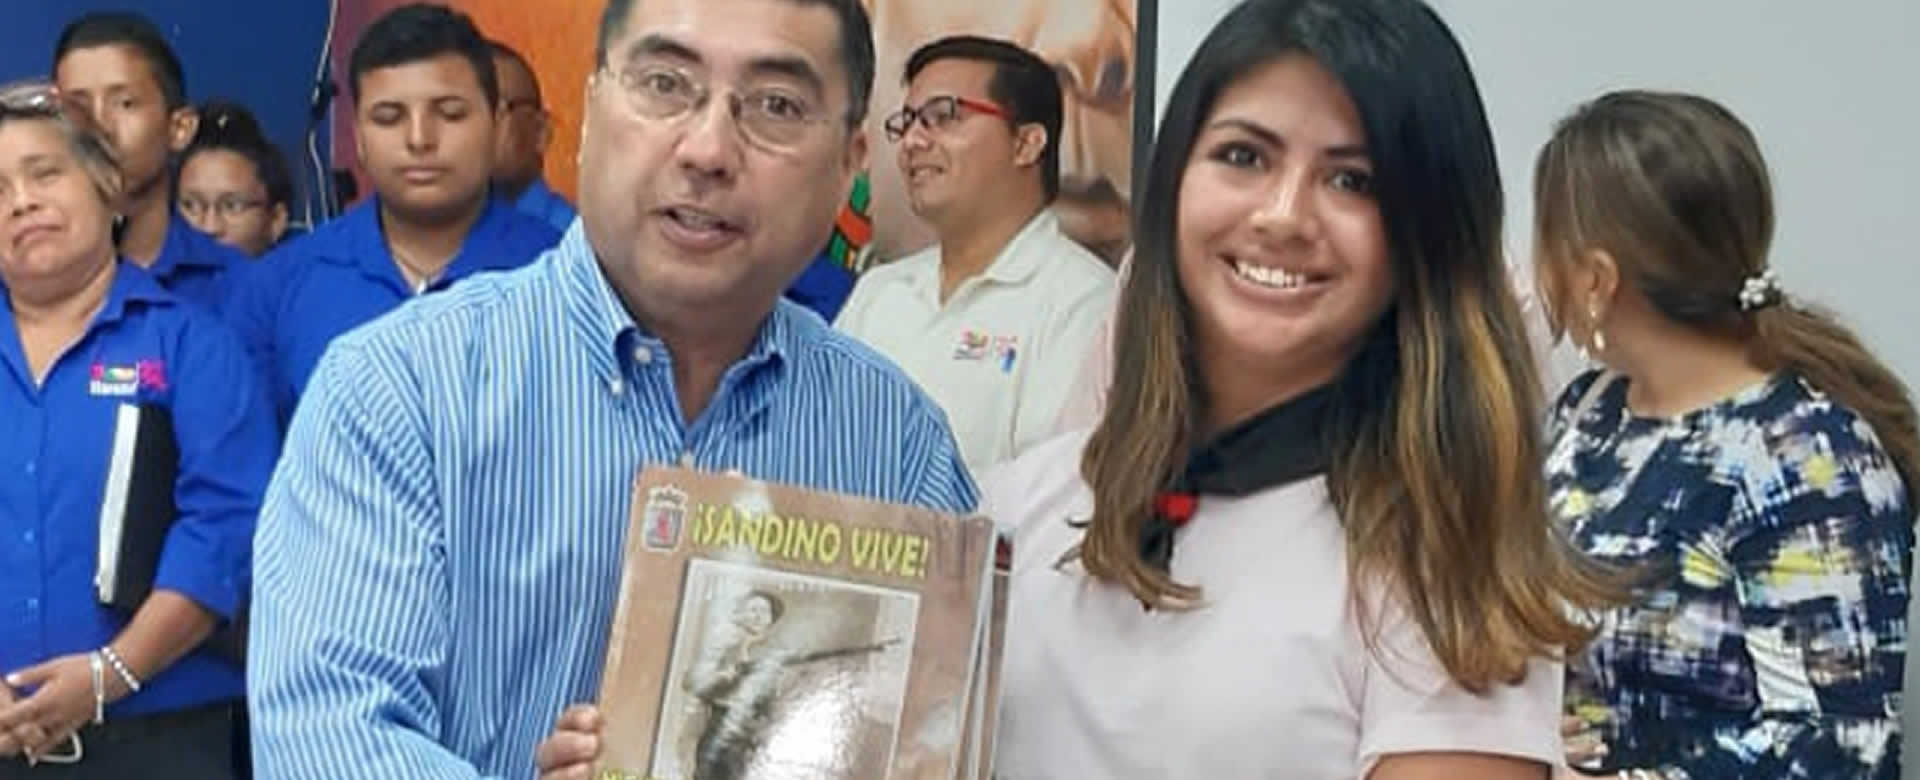 Autoridades de Managua presenta revista “Sandino Vive”